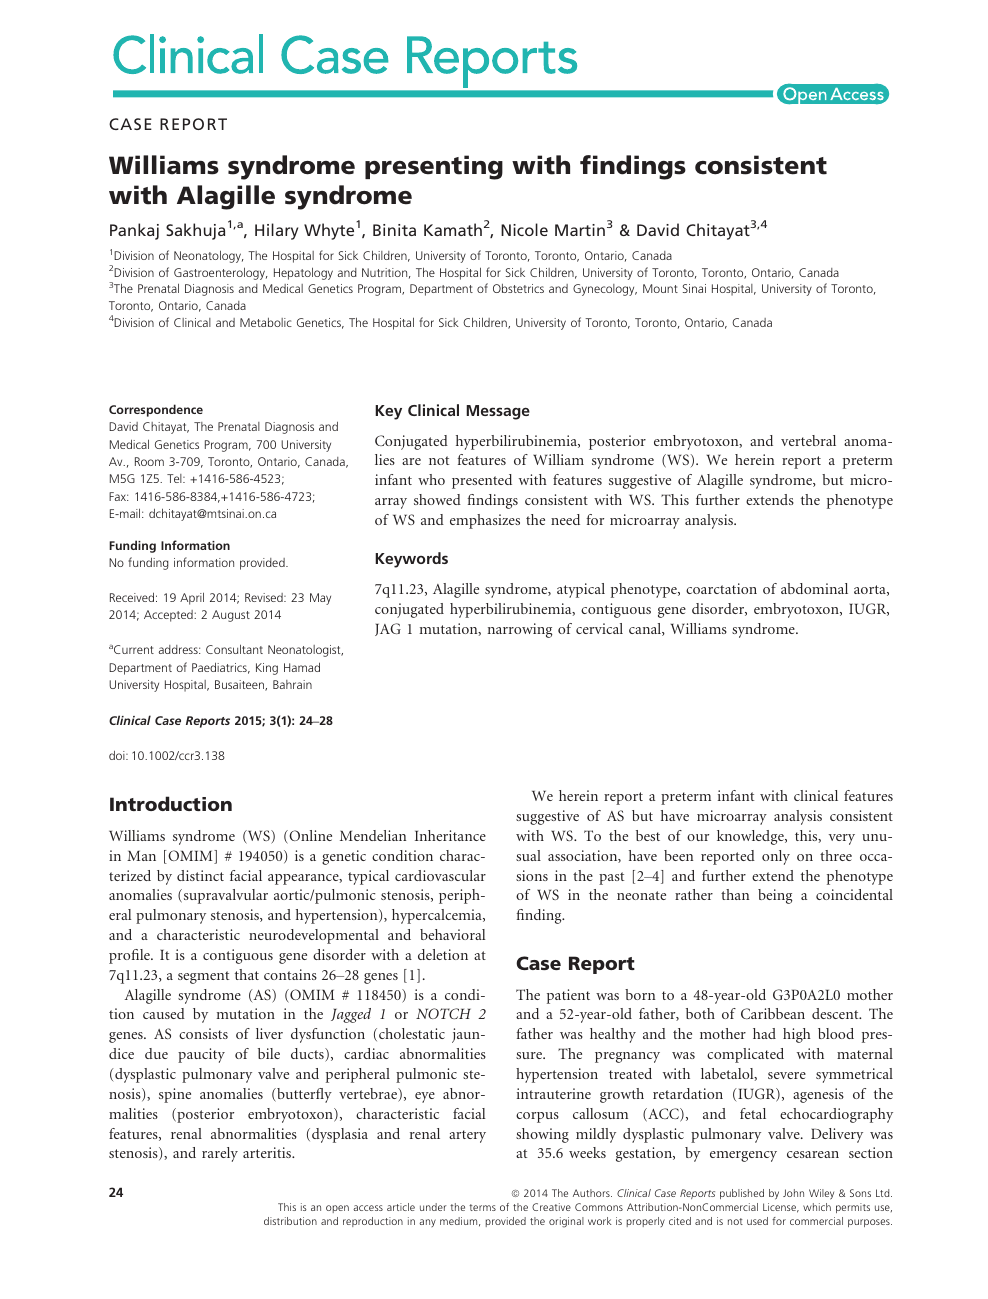 posterior embryotoxon alagille syndrome